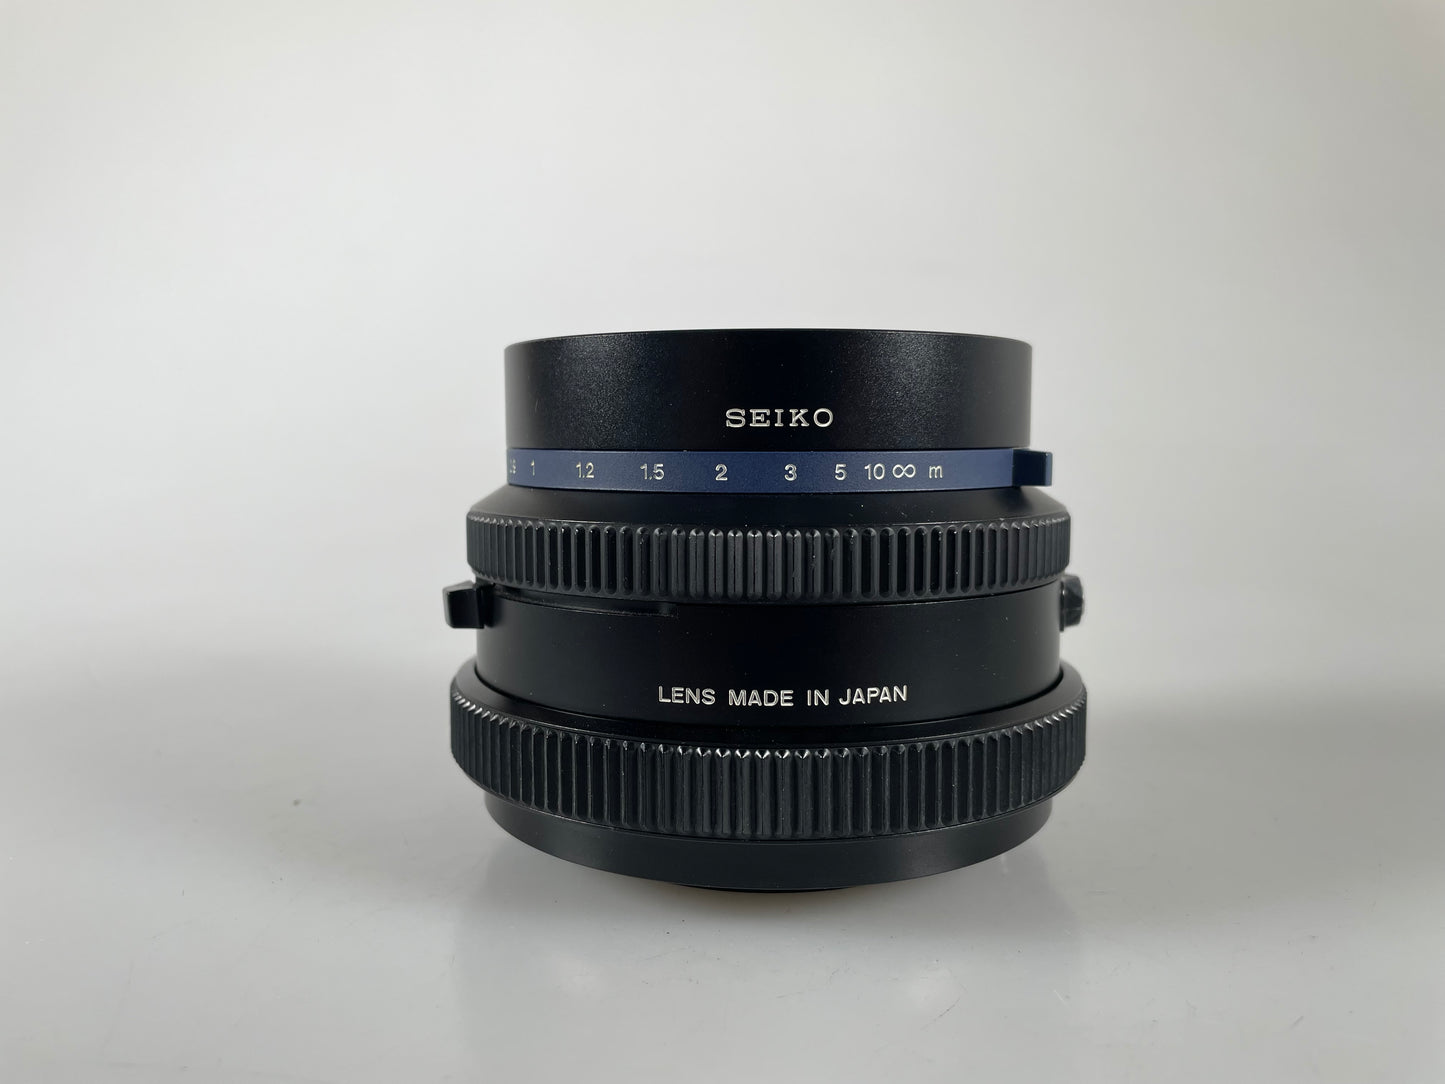 Mamiya Sekor Z 127mm f3.8 W Lens For RZ67 Pro II II D